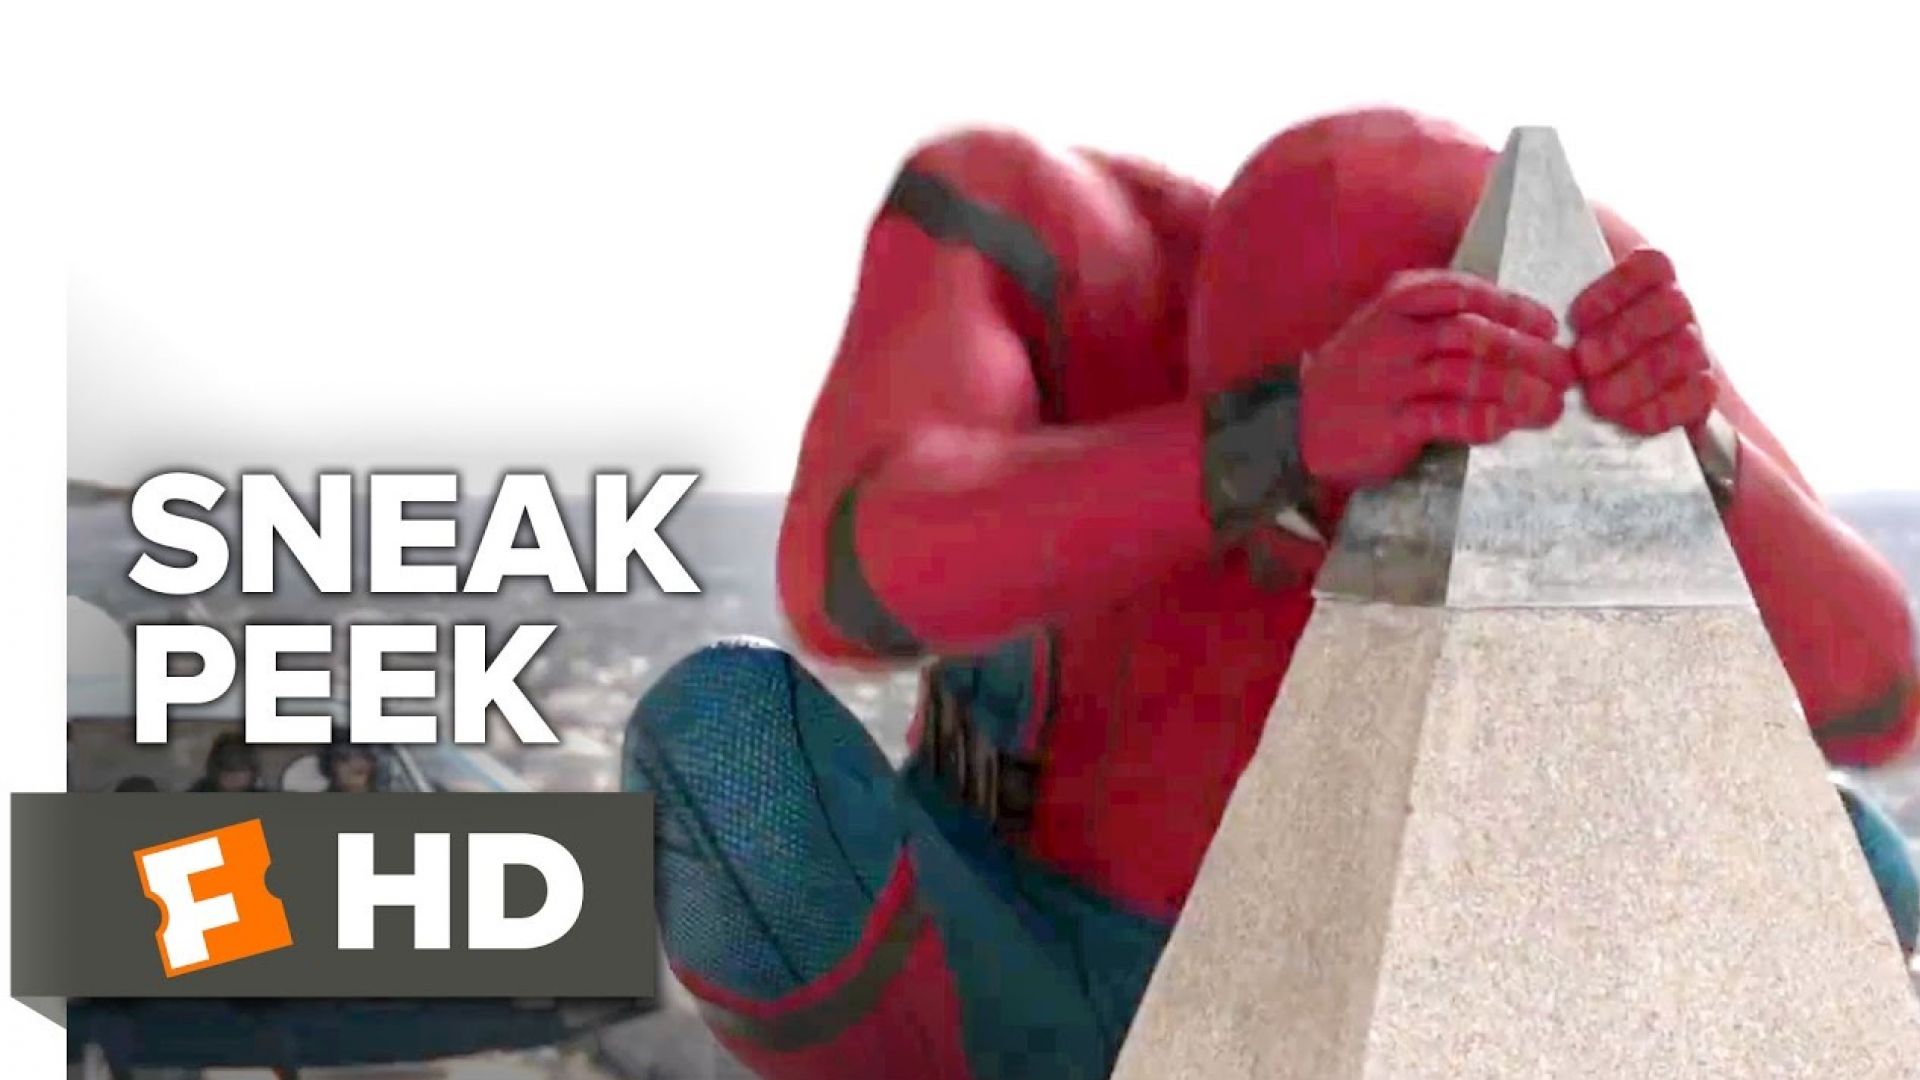 Sneak peek footage at Spider-Man: Homecoming ahead of first 